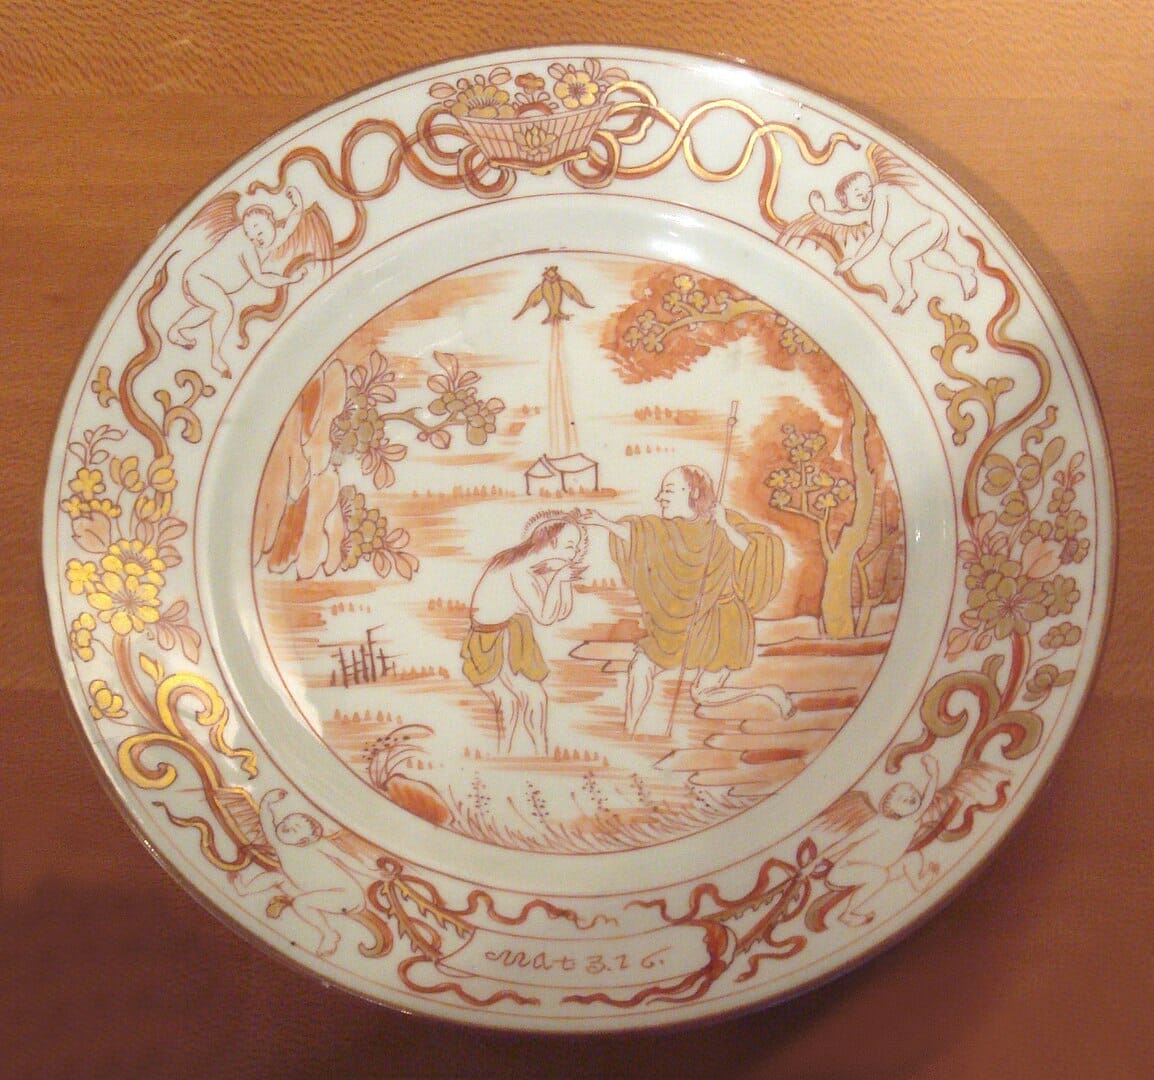 Qing export porcelain with European Christian scene, 1725–1735.